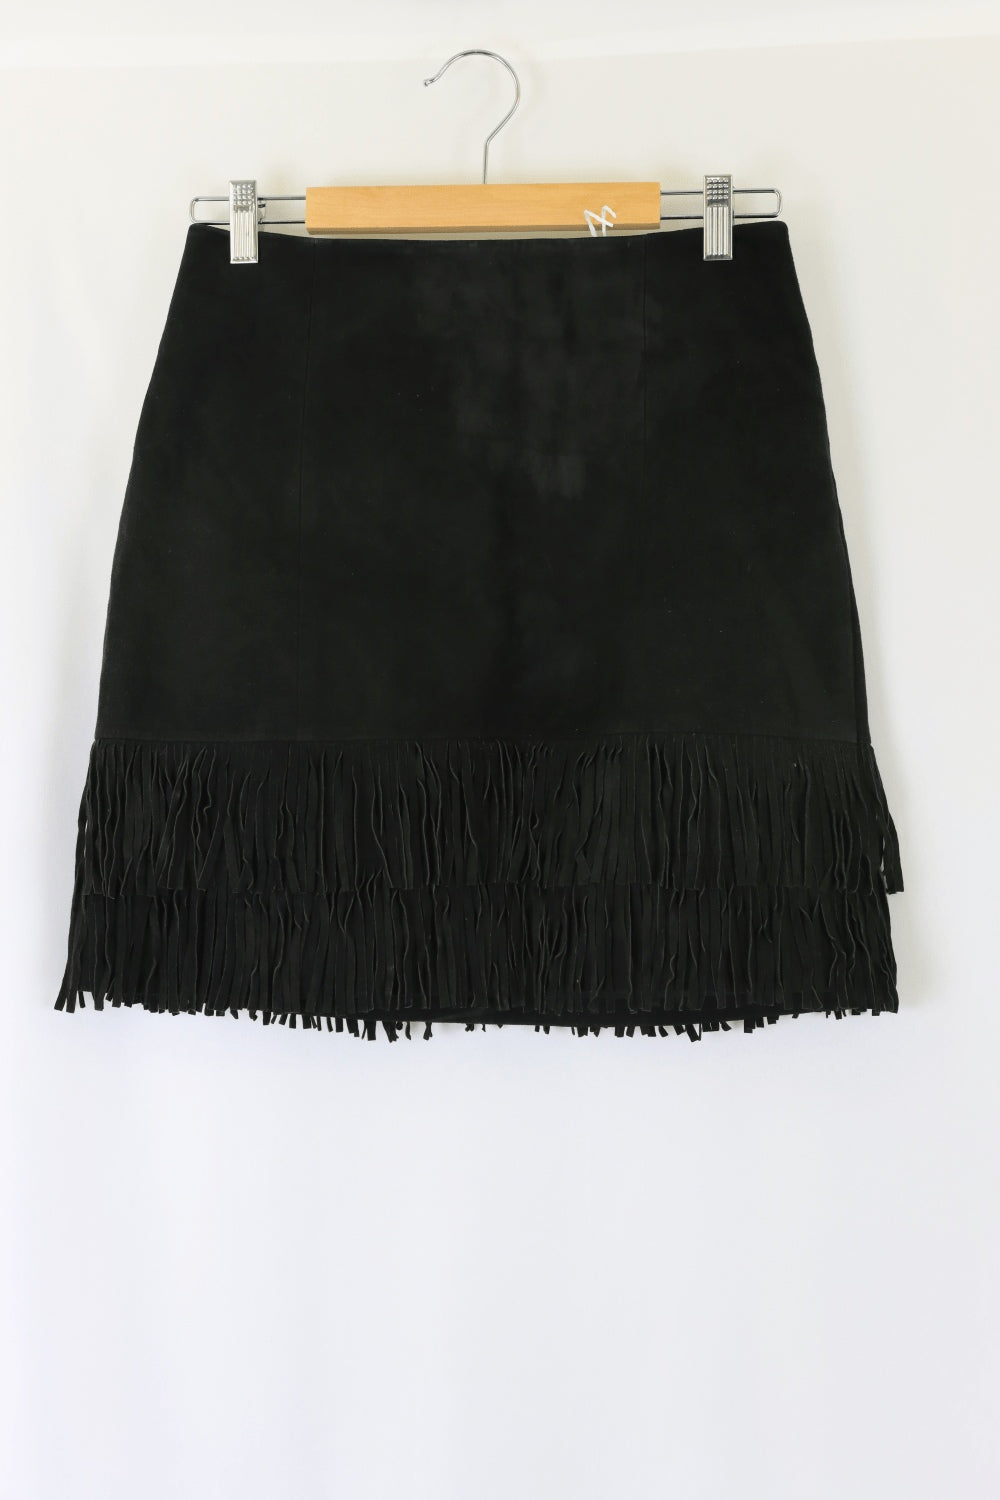 Kookai Black Suede Skirt 10